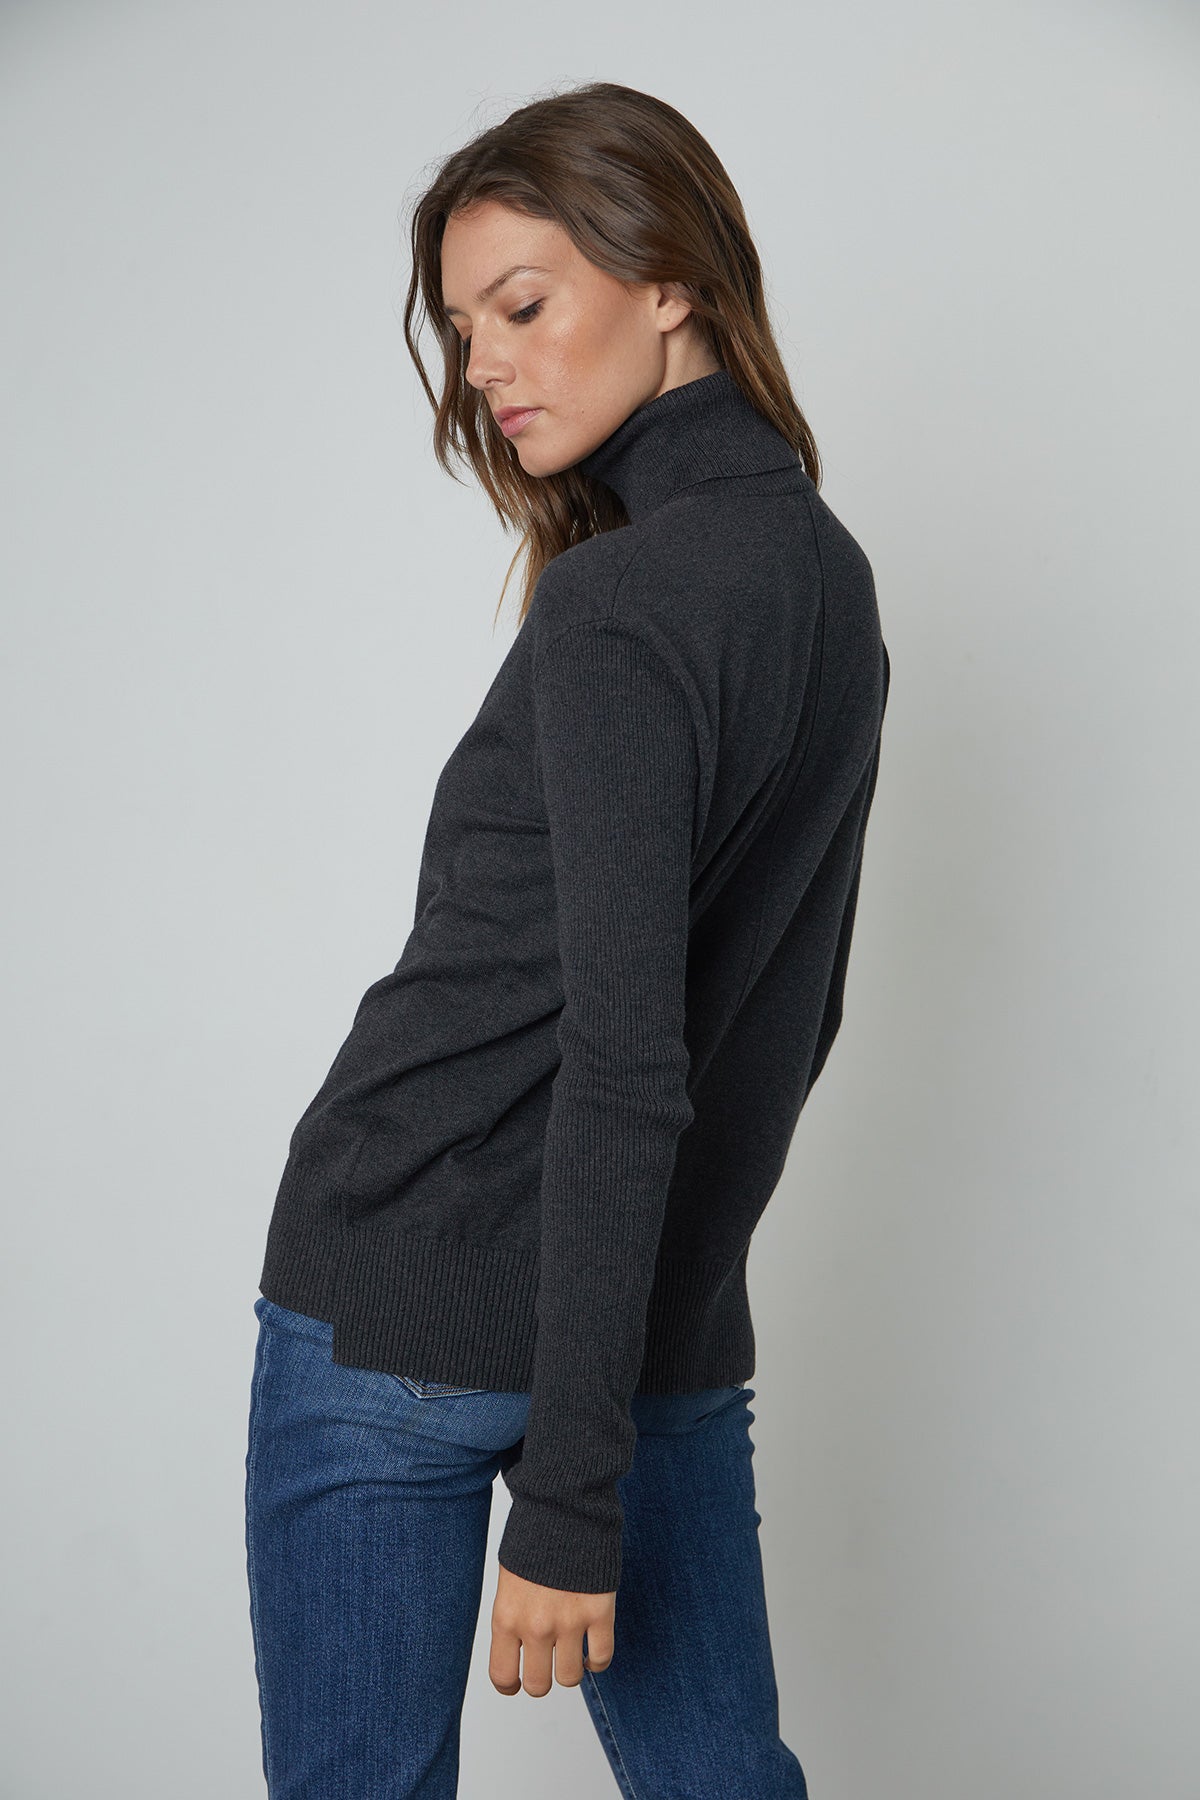   Lux Cotton Cashmere Renny Turtleneck Sweater in dark grey cinder back and side 